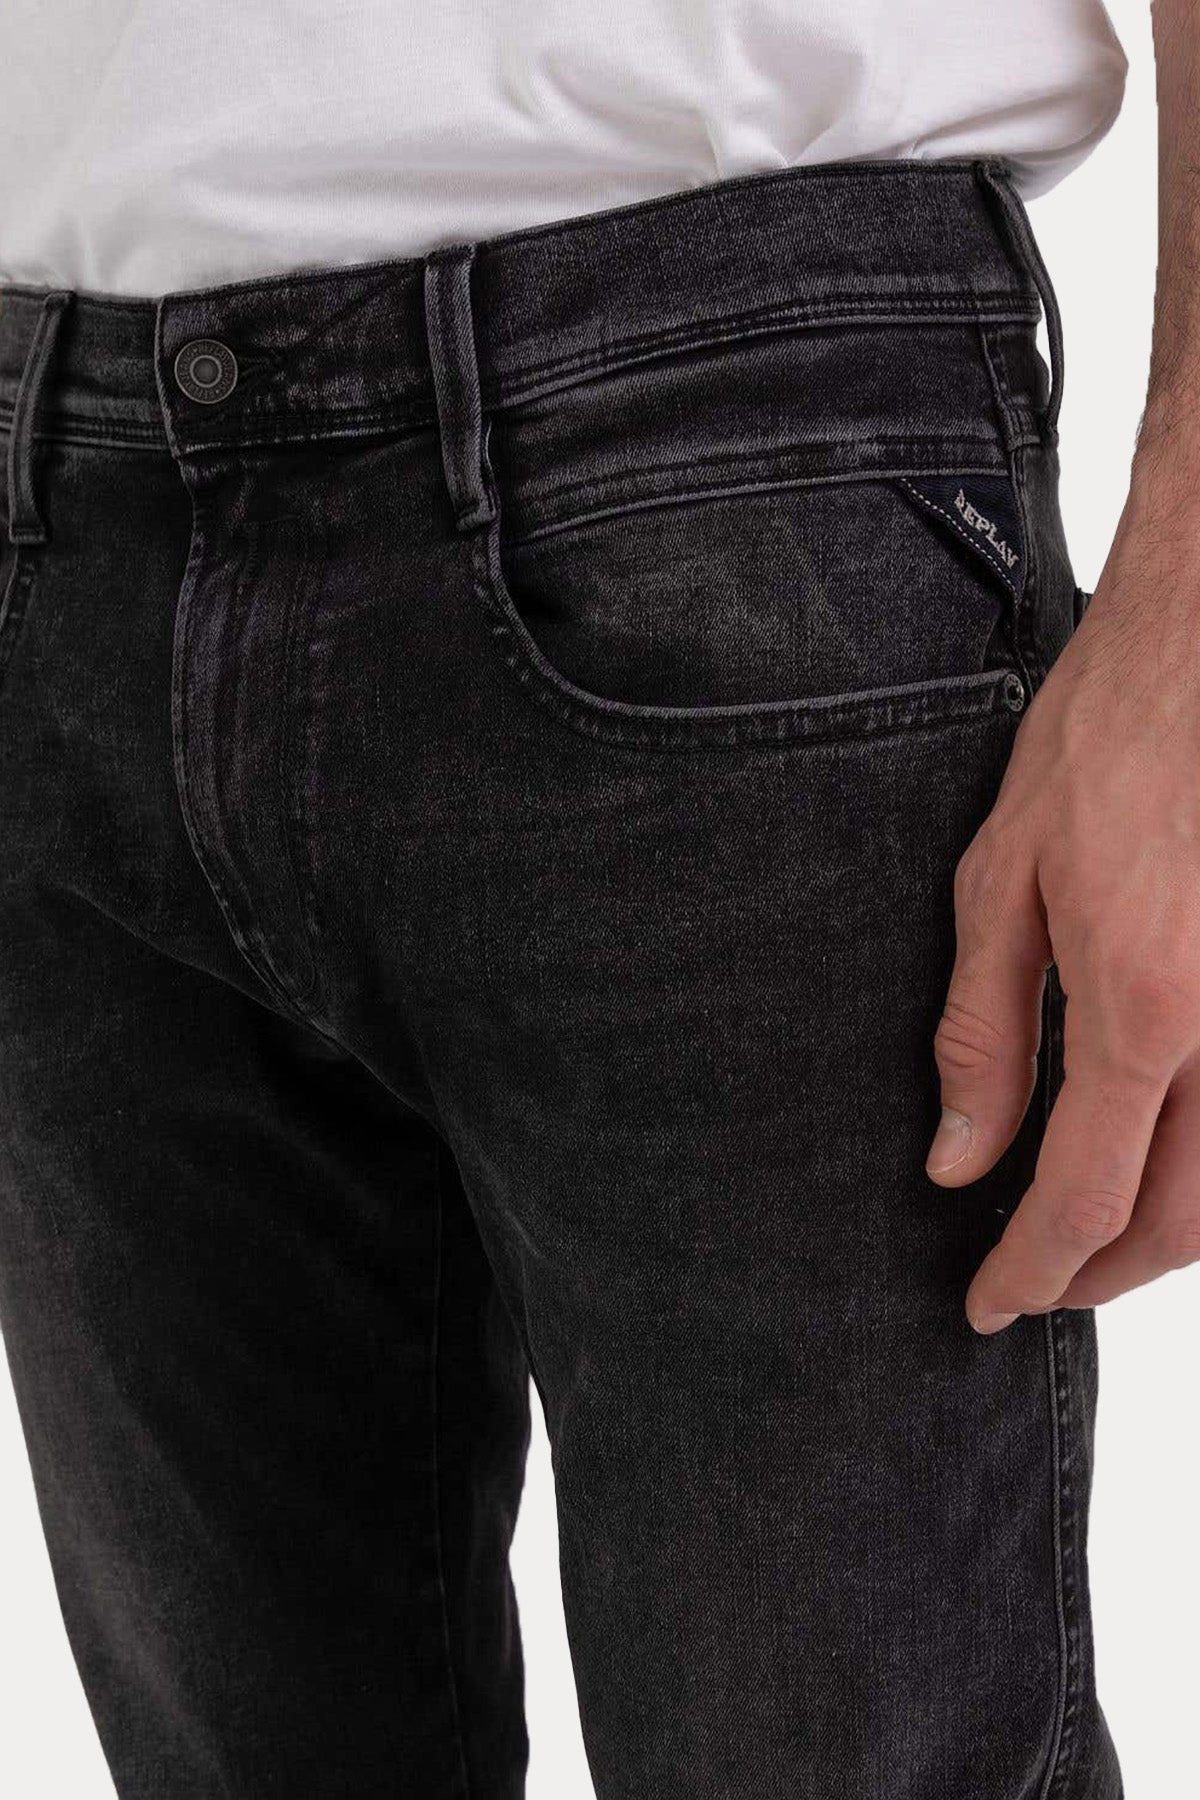 Replay Anbass Hyperflex X-Lite Re-Used Slim Fit Jeans-Libas Trendy Fashion Store